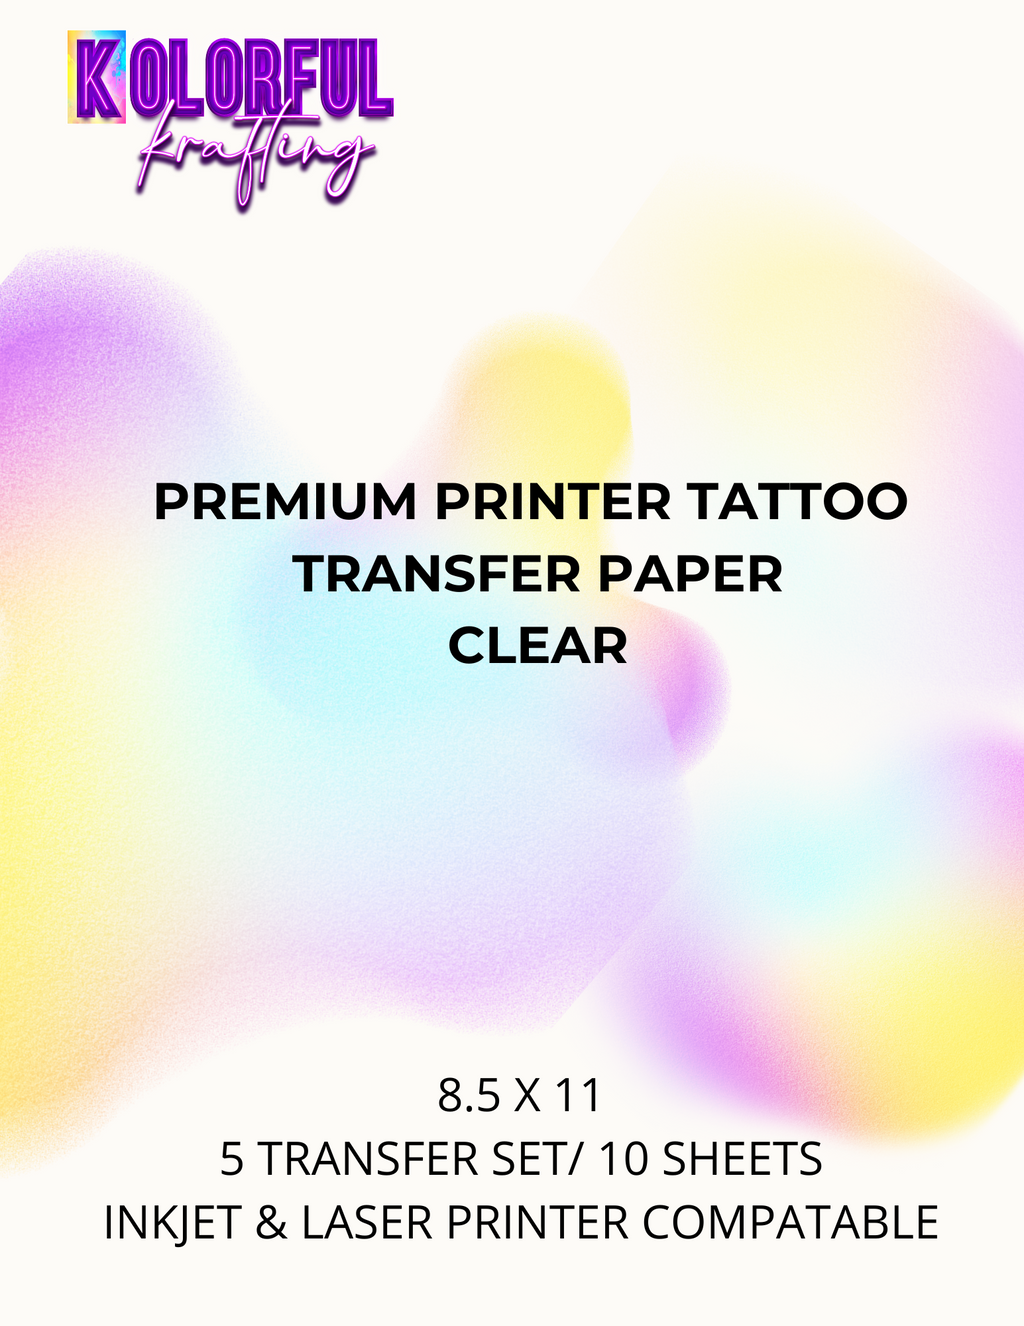 Kolorful Krafting Premium Printer Tattoo Transfer Paper